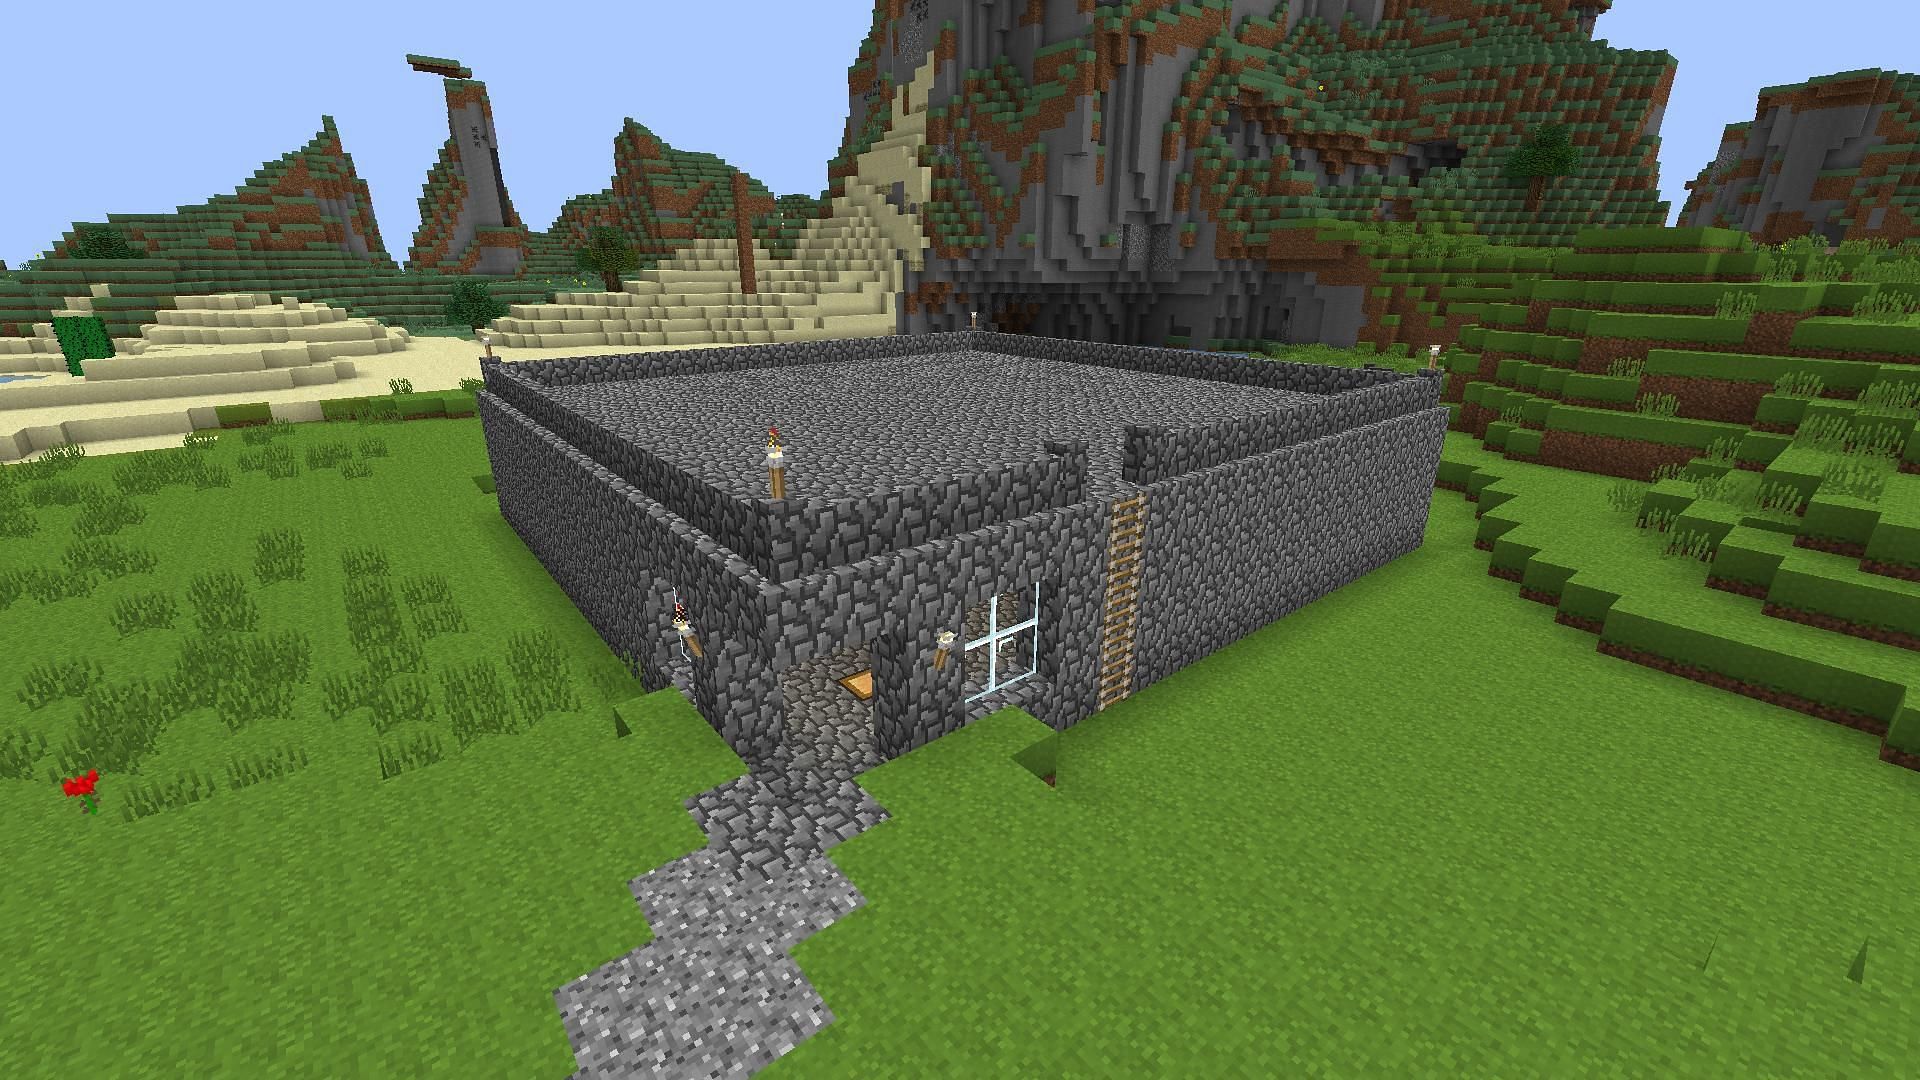 Cobblestone house in Minecraft (Image via Mojang)